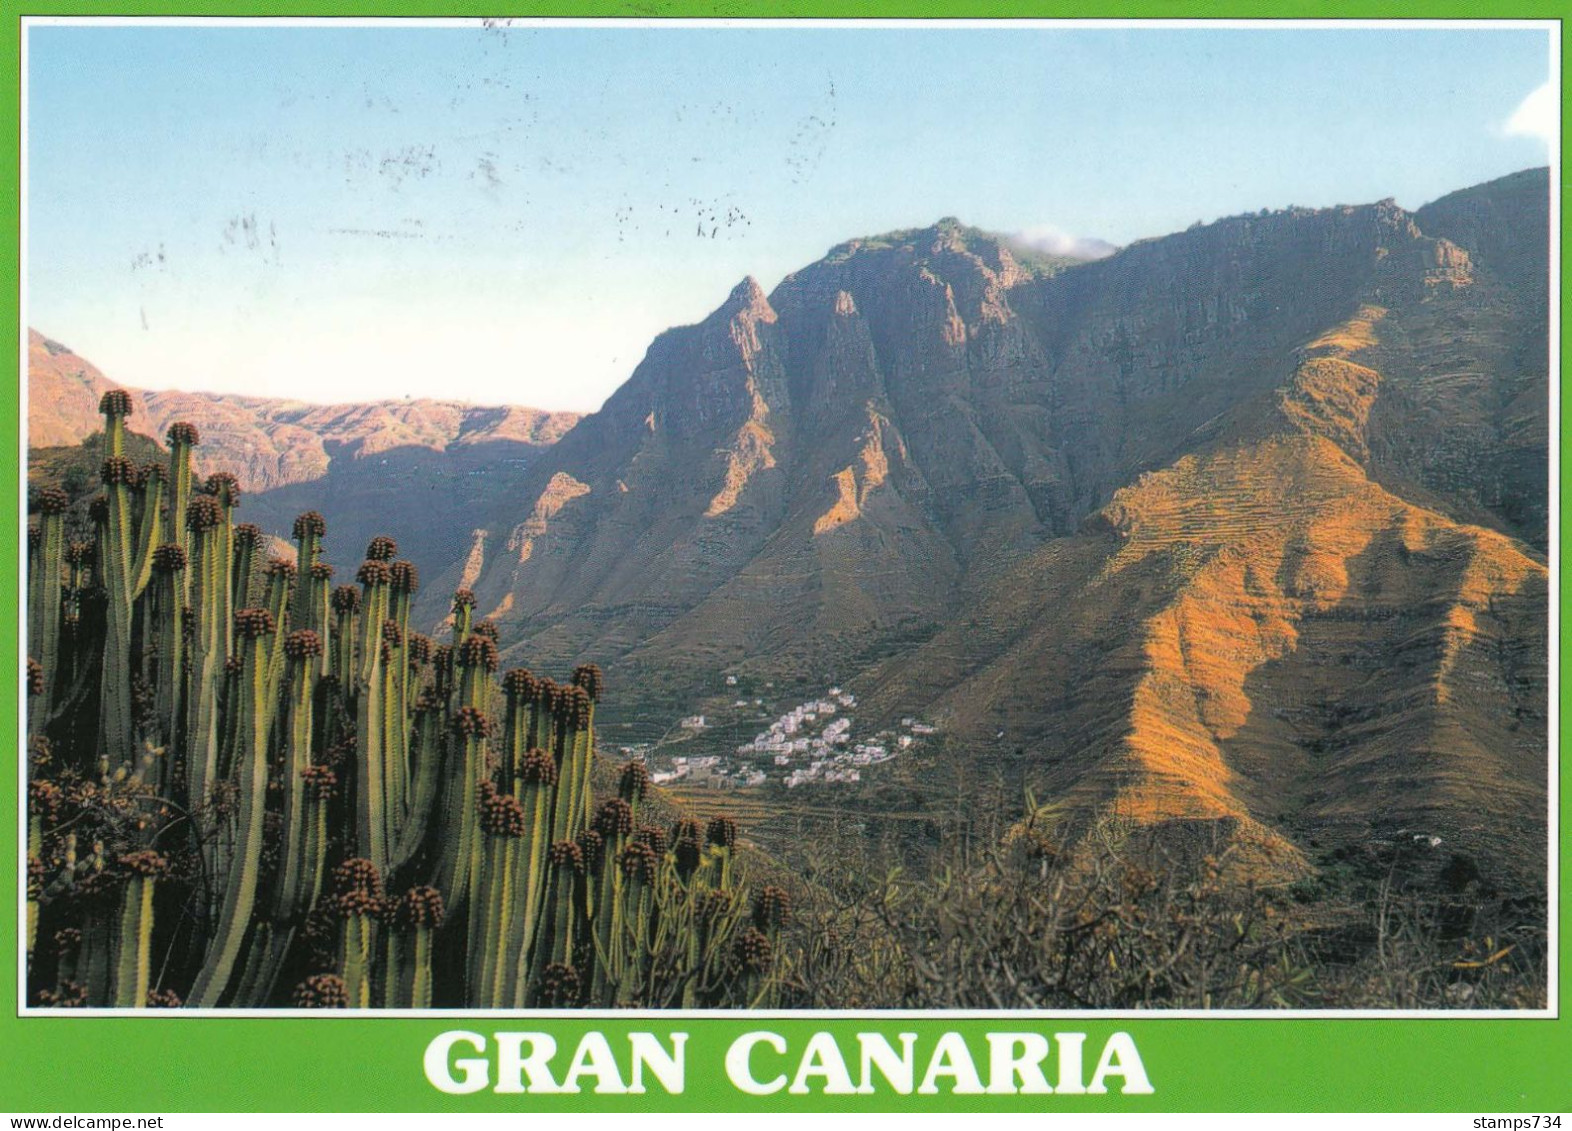 Espana-05/2014 - 0.75 Euro - I Need Spain, View Of Gran Canaria, Post Card - Covers & Documents